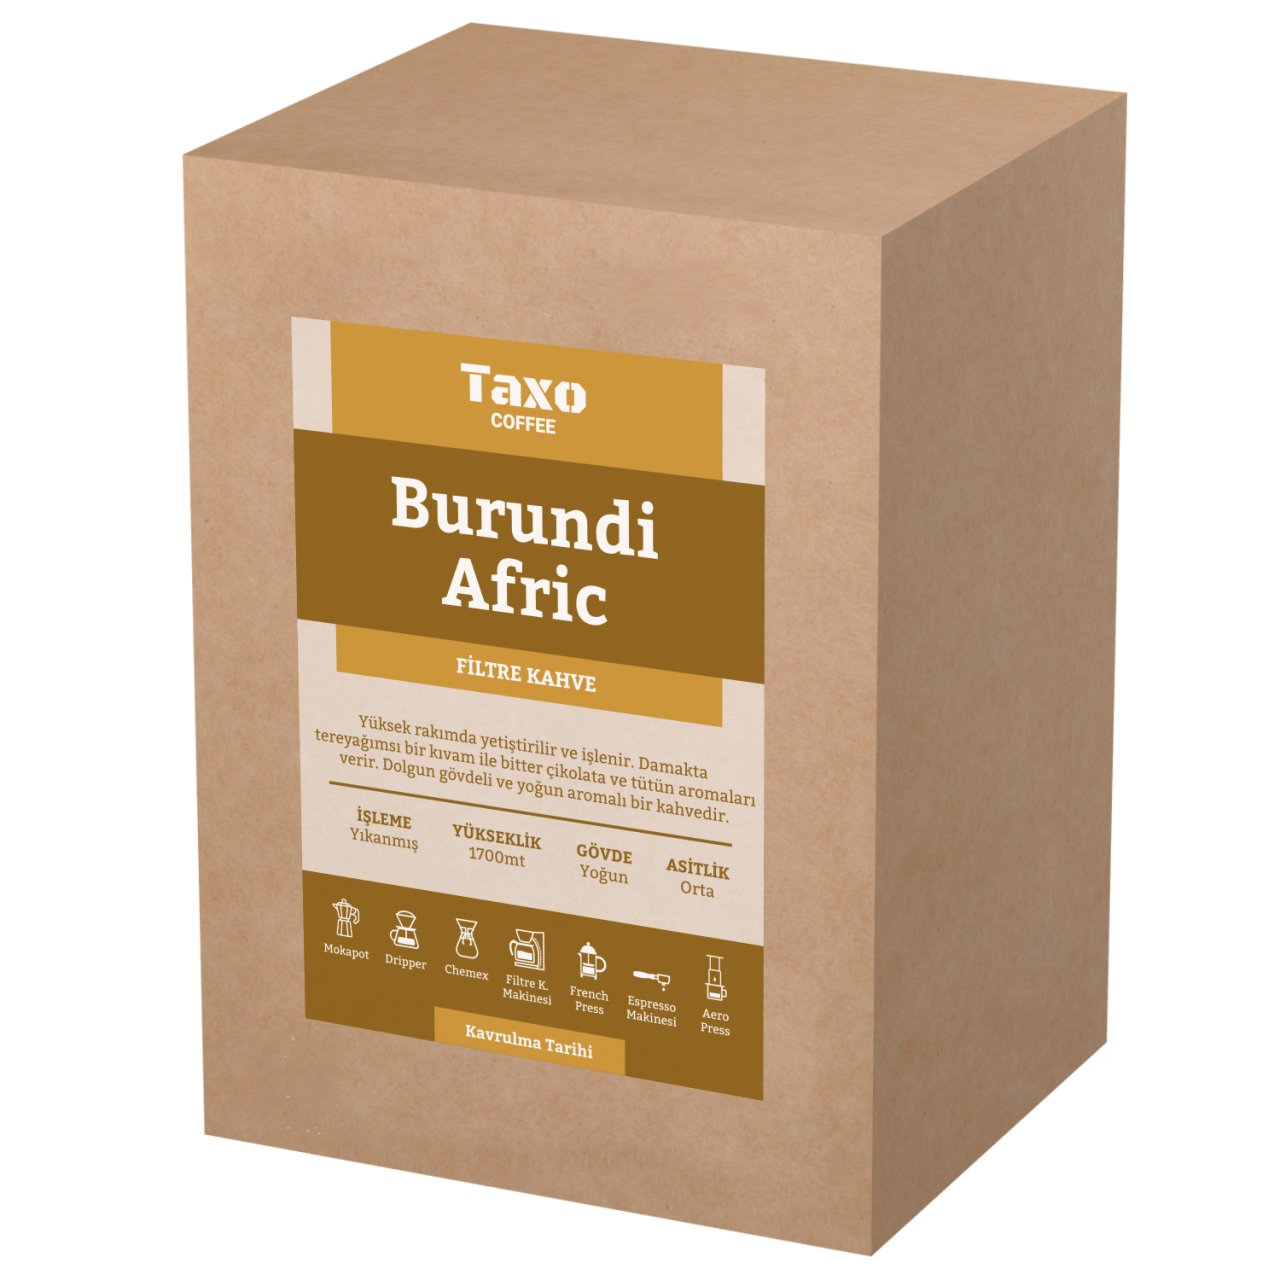 Burundi Afric 5kg Filtre Kahve